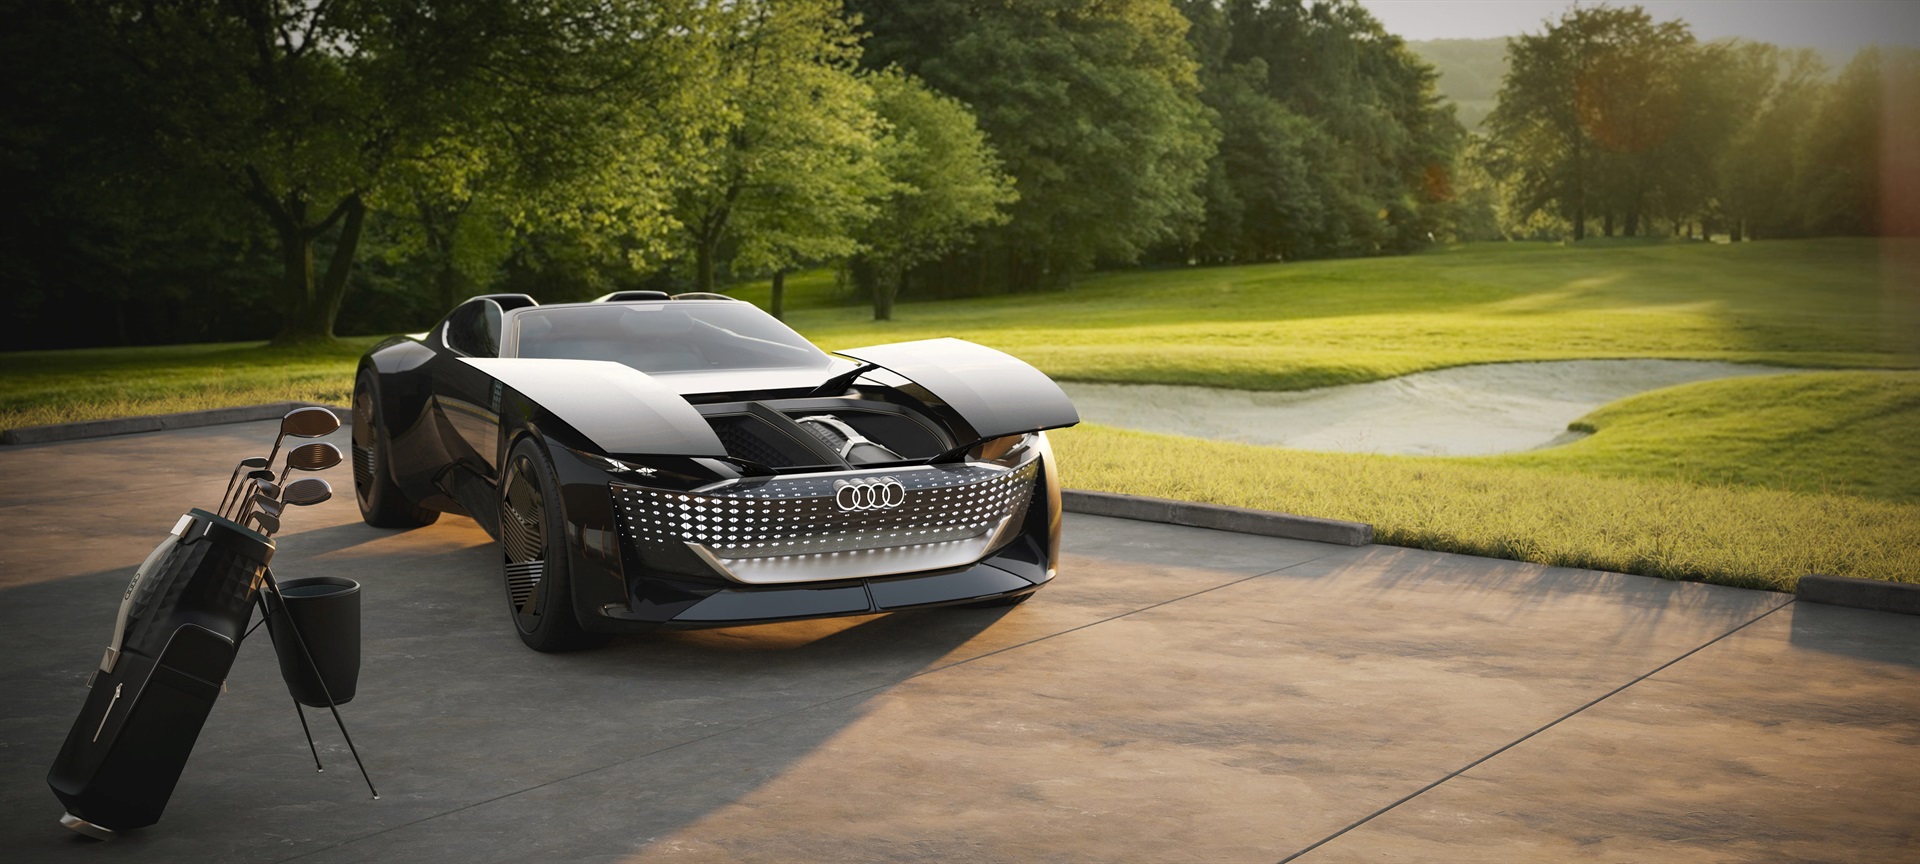 audi skysphere concept ev electric selfdriving car that changes shape 2021 8